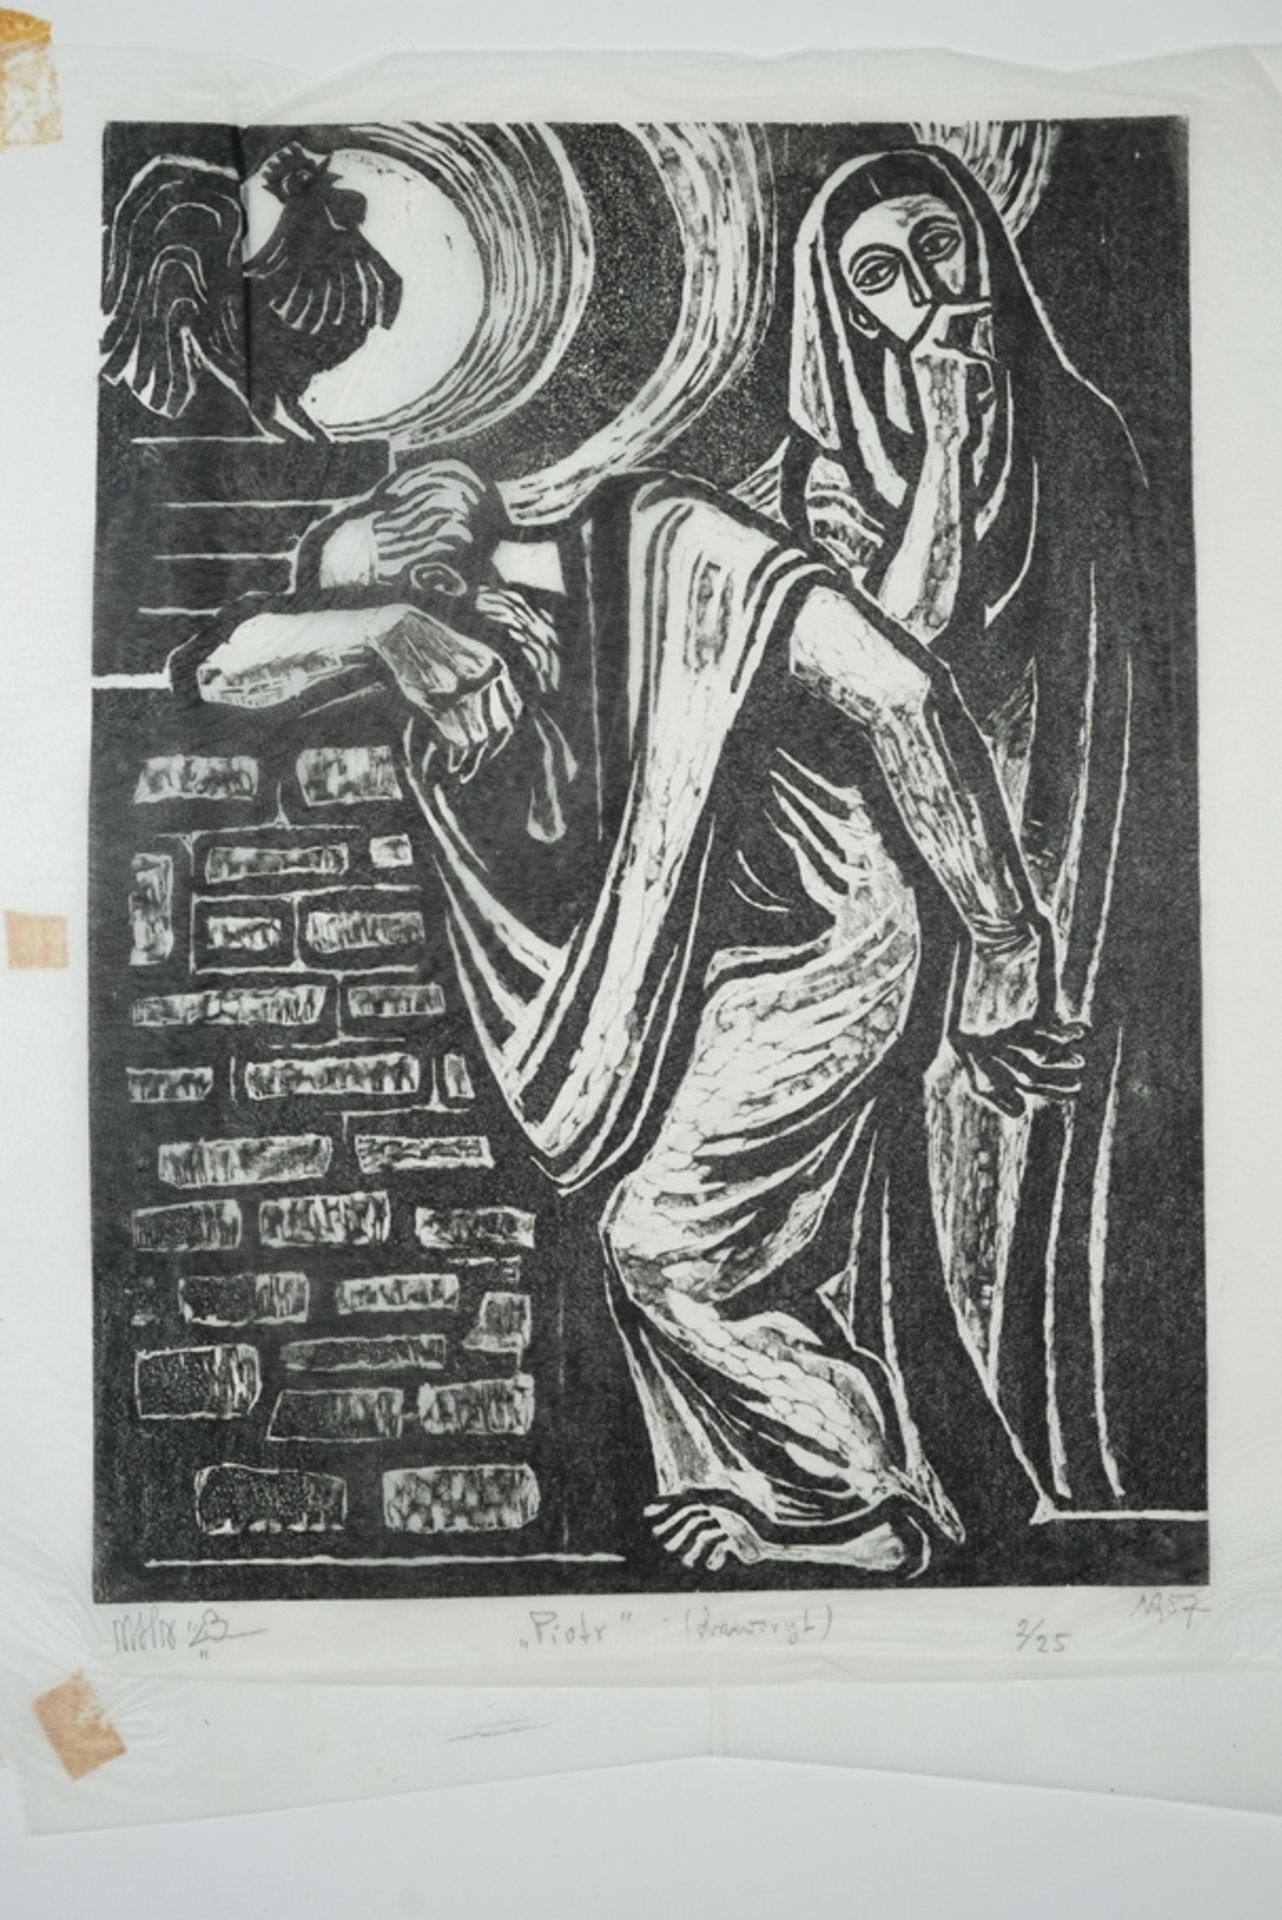 Hiszpanska-Neumann, Maria (1917-1980) "Piotr", depiction of St Peter, 1957, woodcut on tissue paper